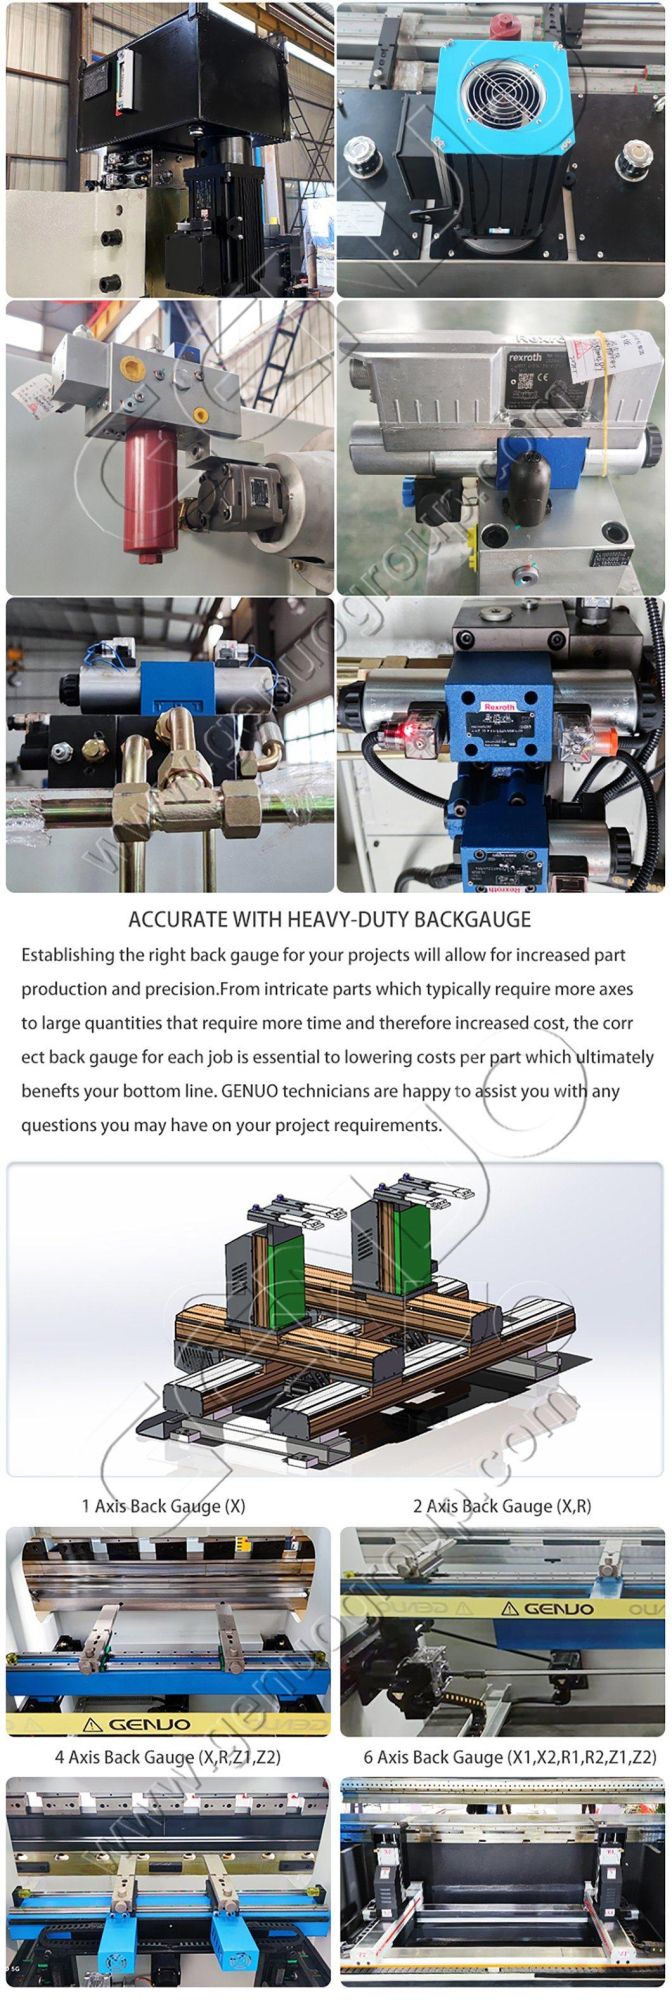 Hydraulic CNC Small Press Brake for Mild Steel Bending